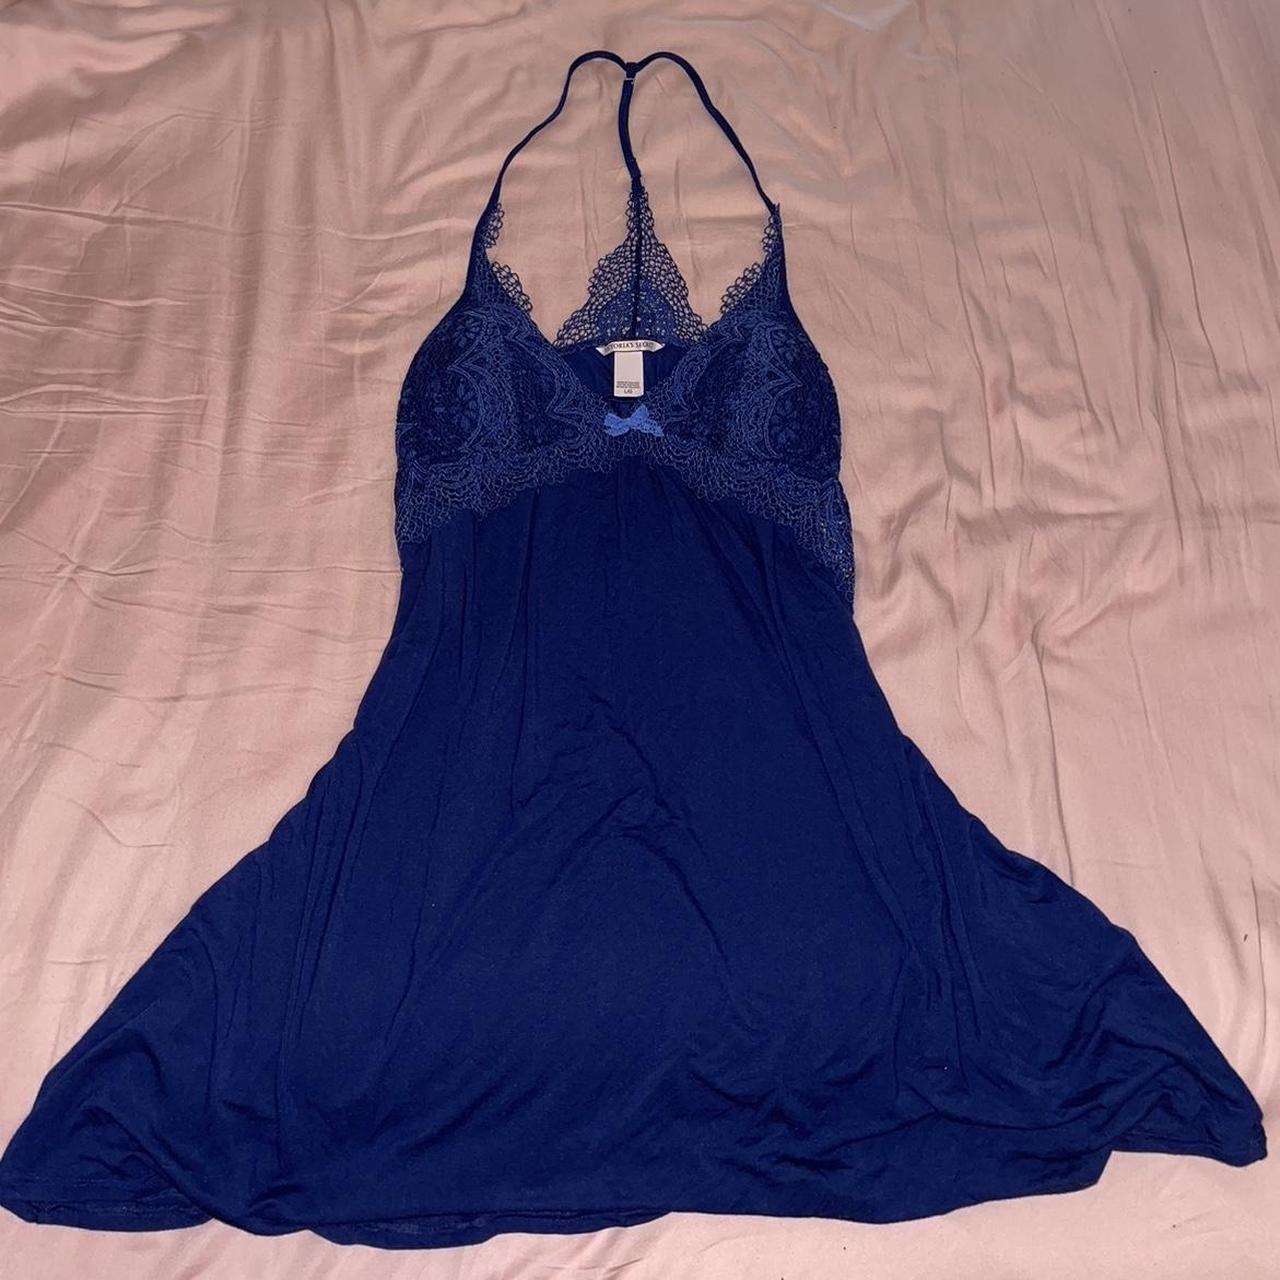 Victoria's Secret Women's Blue and Navy Dress | Depop